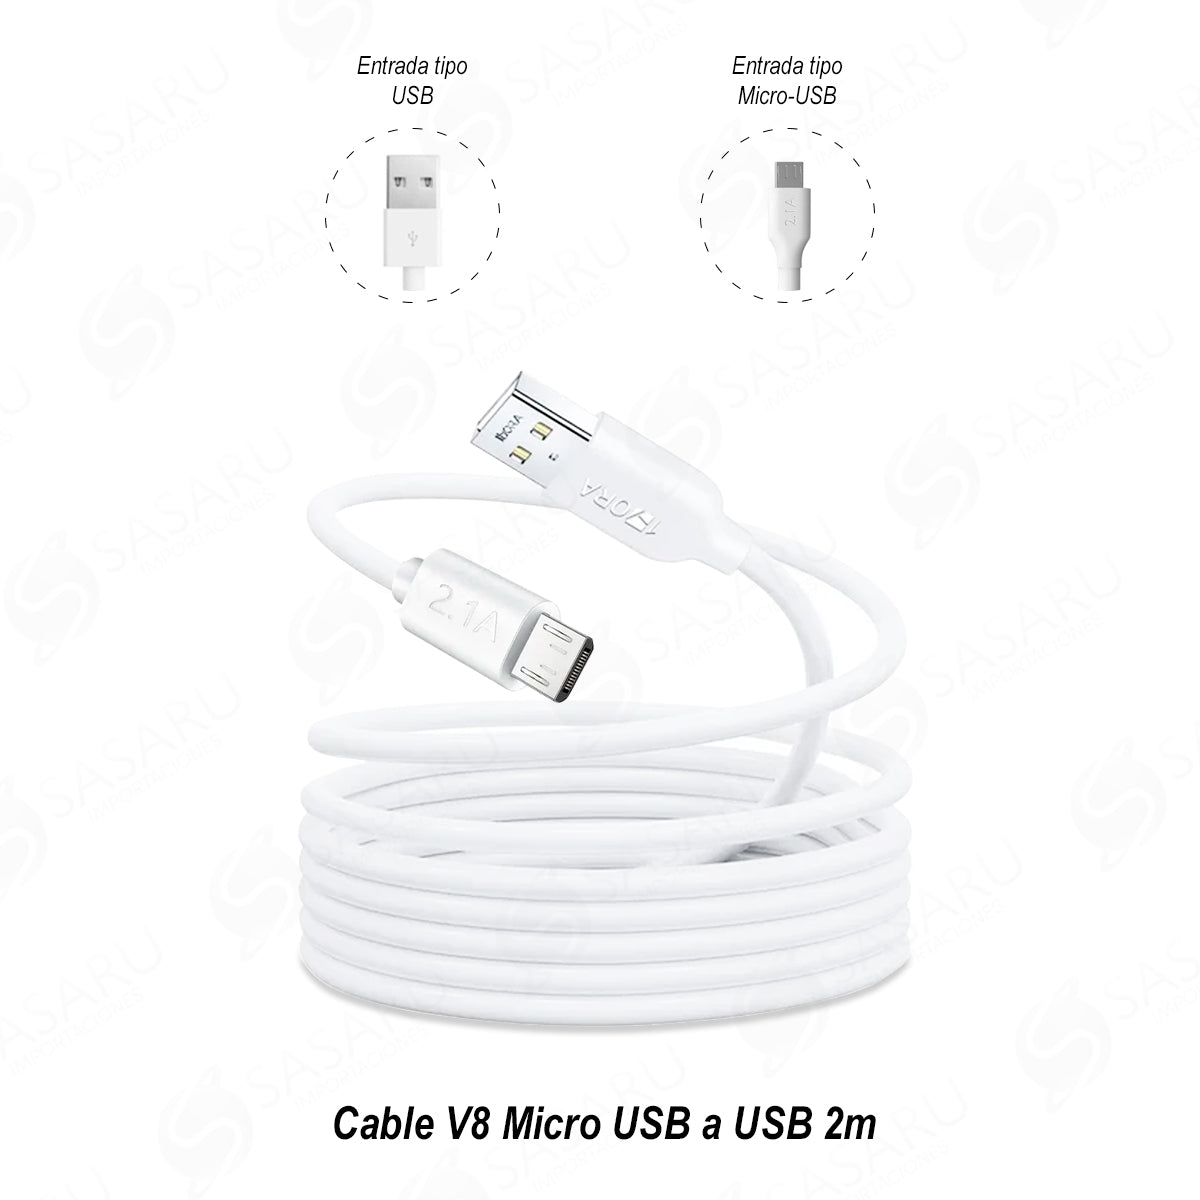 Cable V8 Micro USB a USB 2m